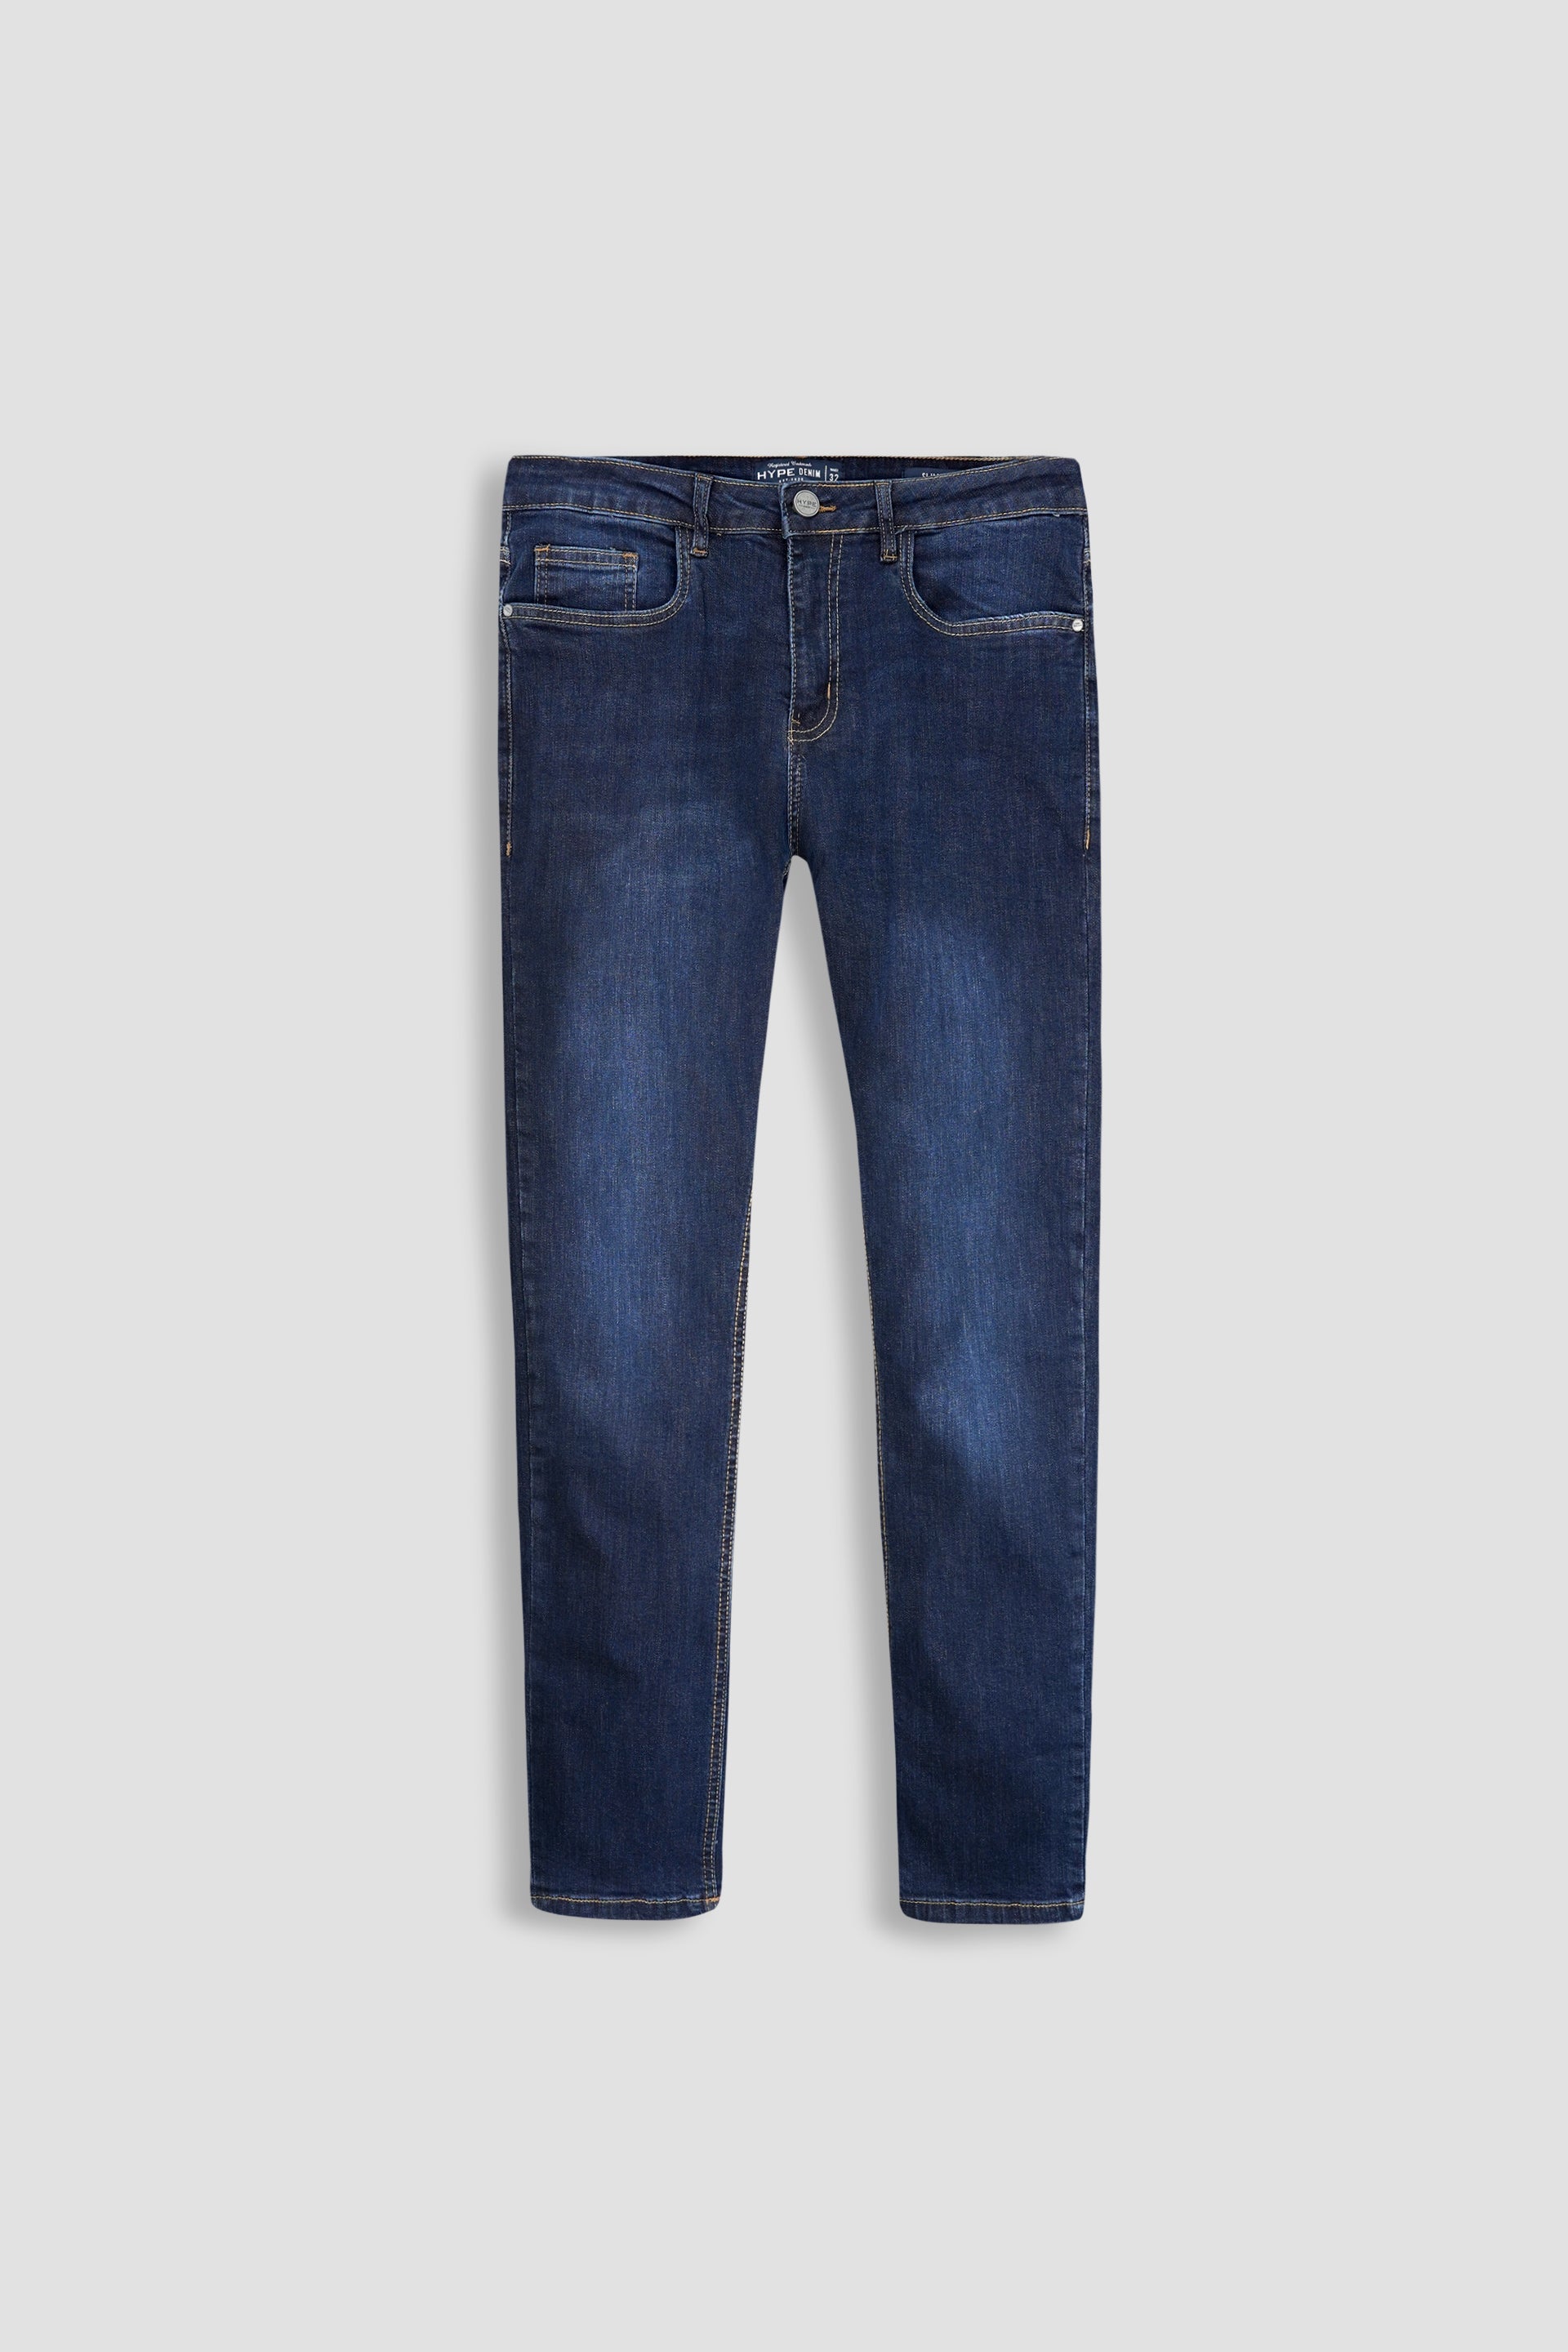 Blue Slim Fit Denim Jeans 002509